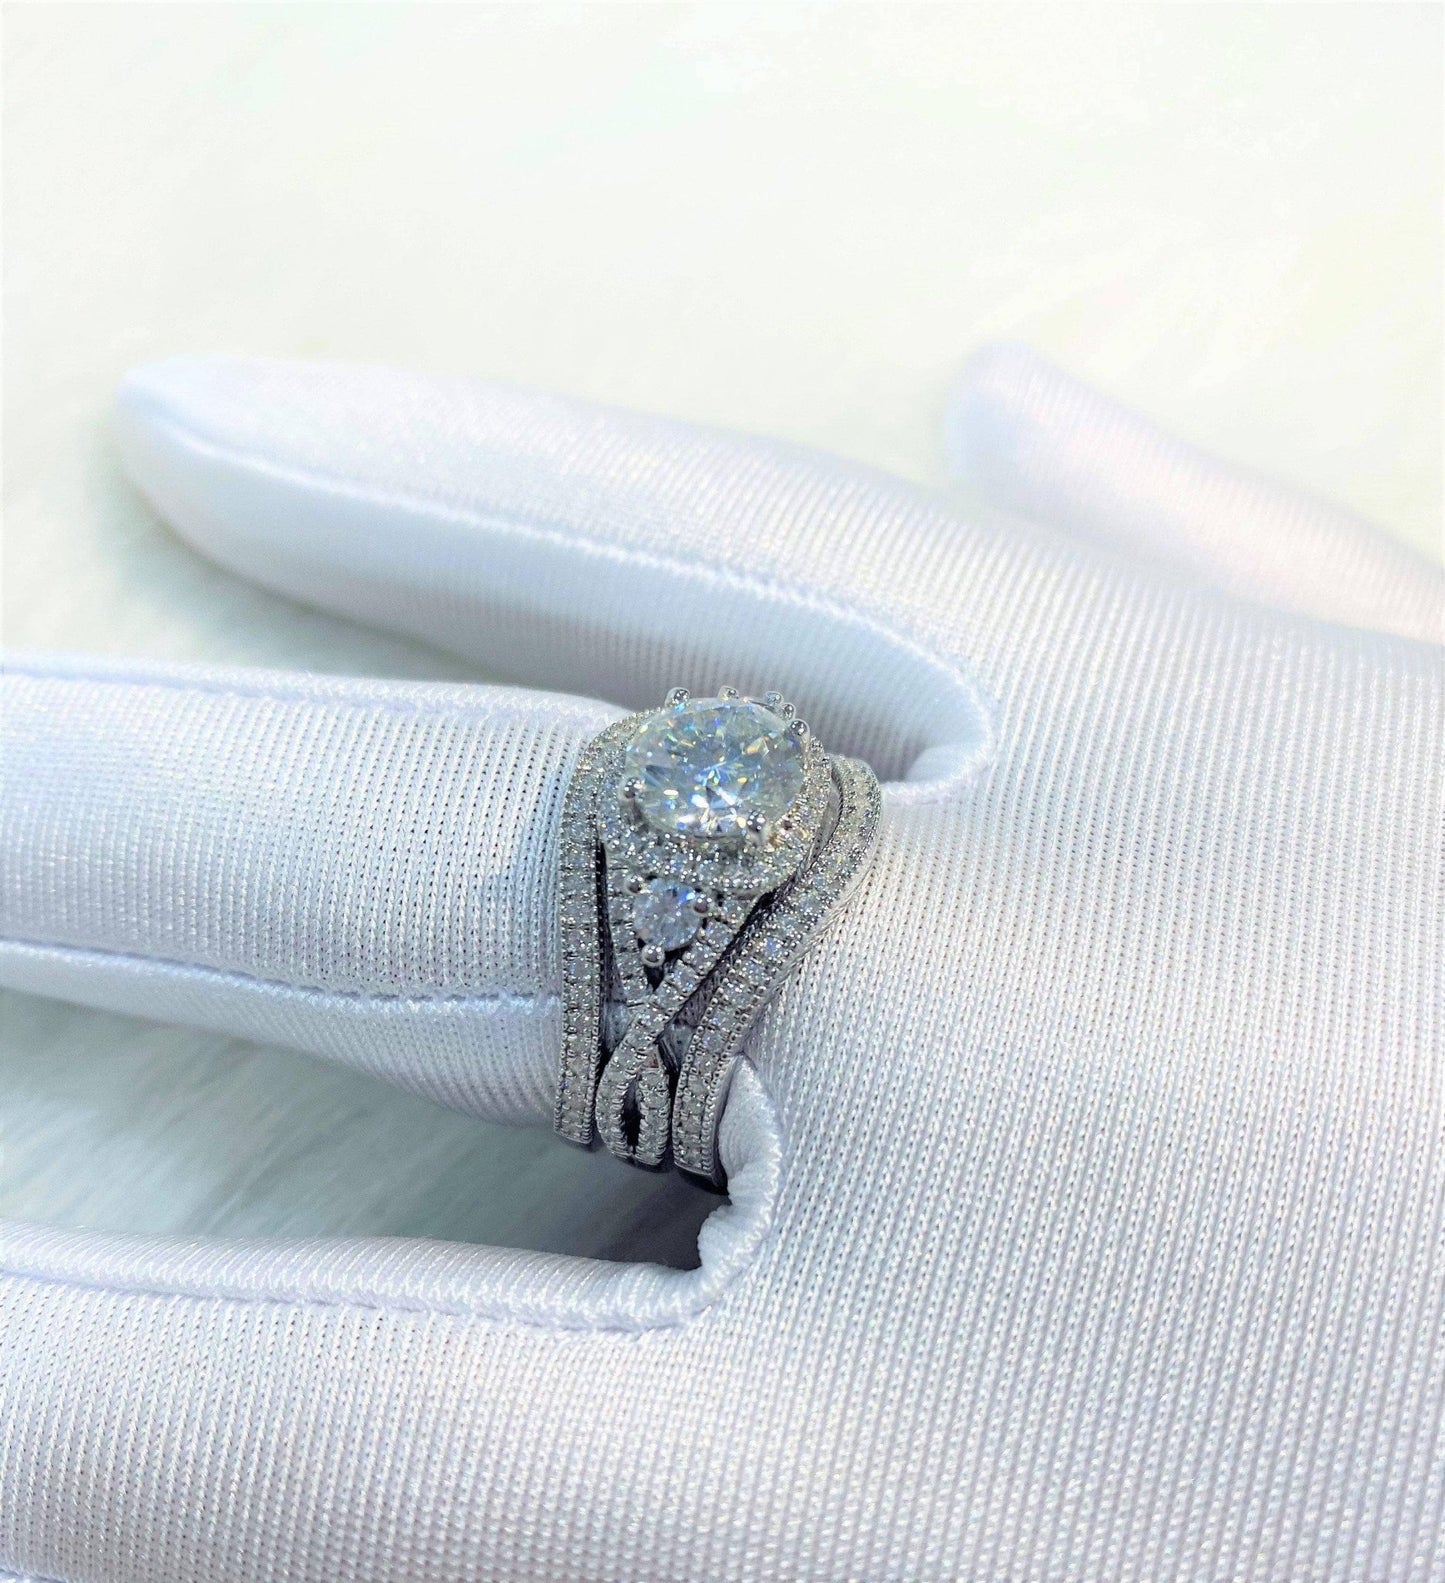 3 piece Round Cut Diamond Engagement Ring Set-Black Diamonds New York